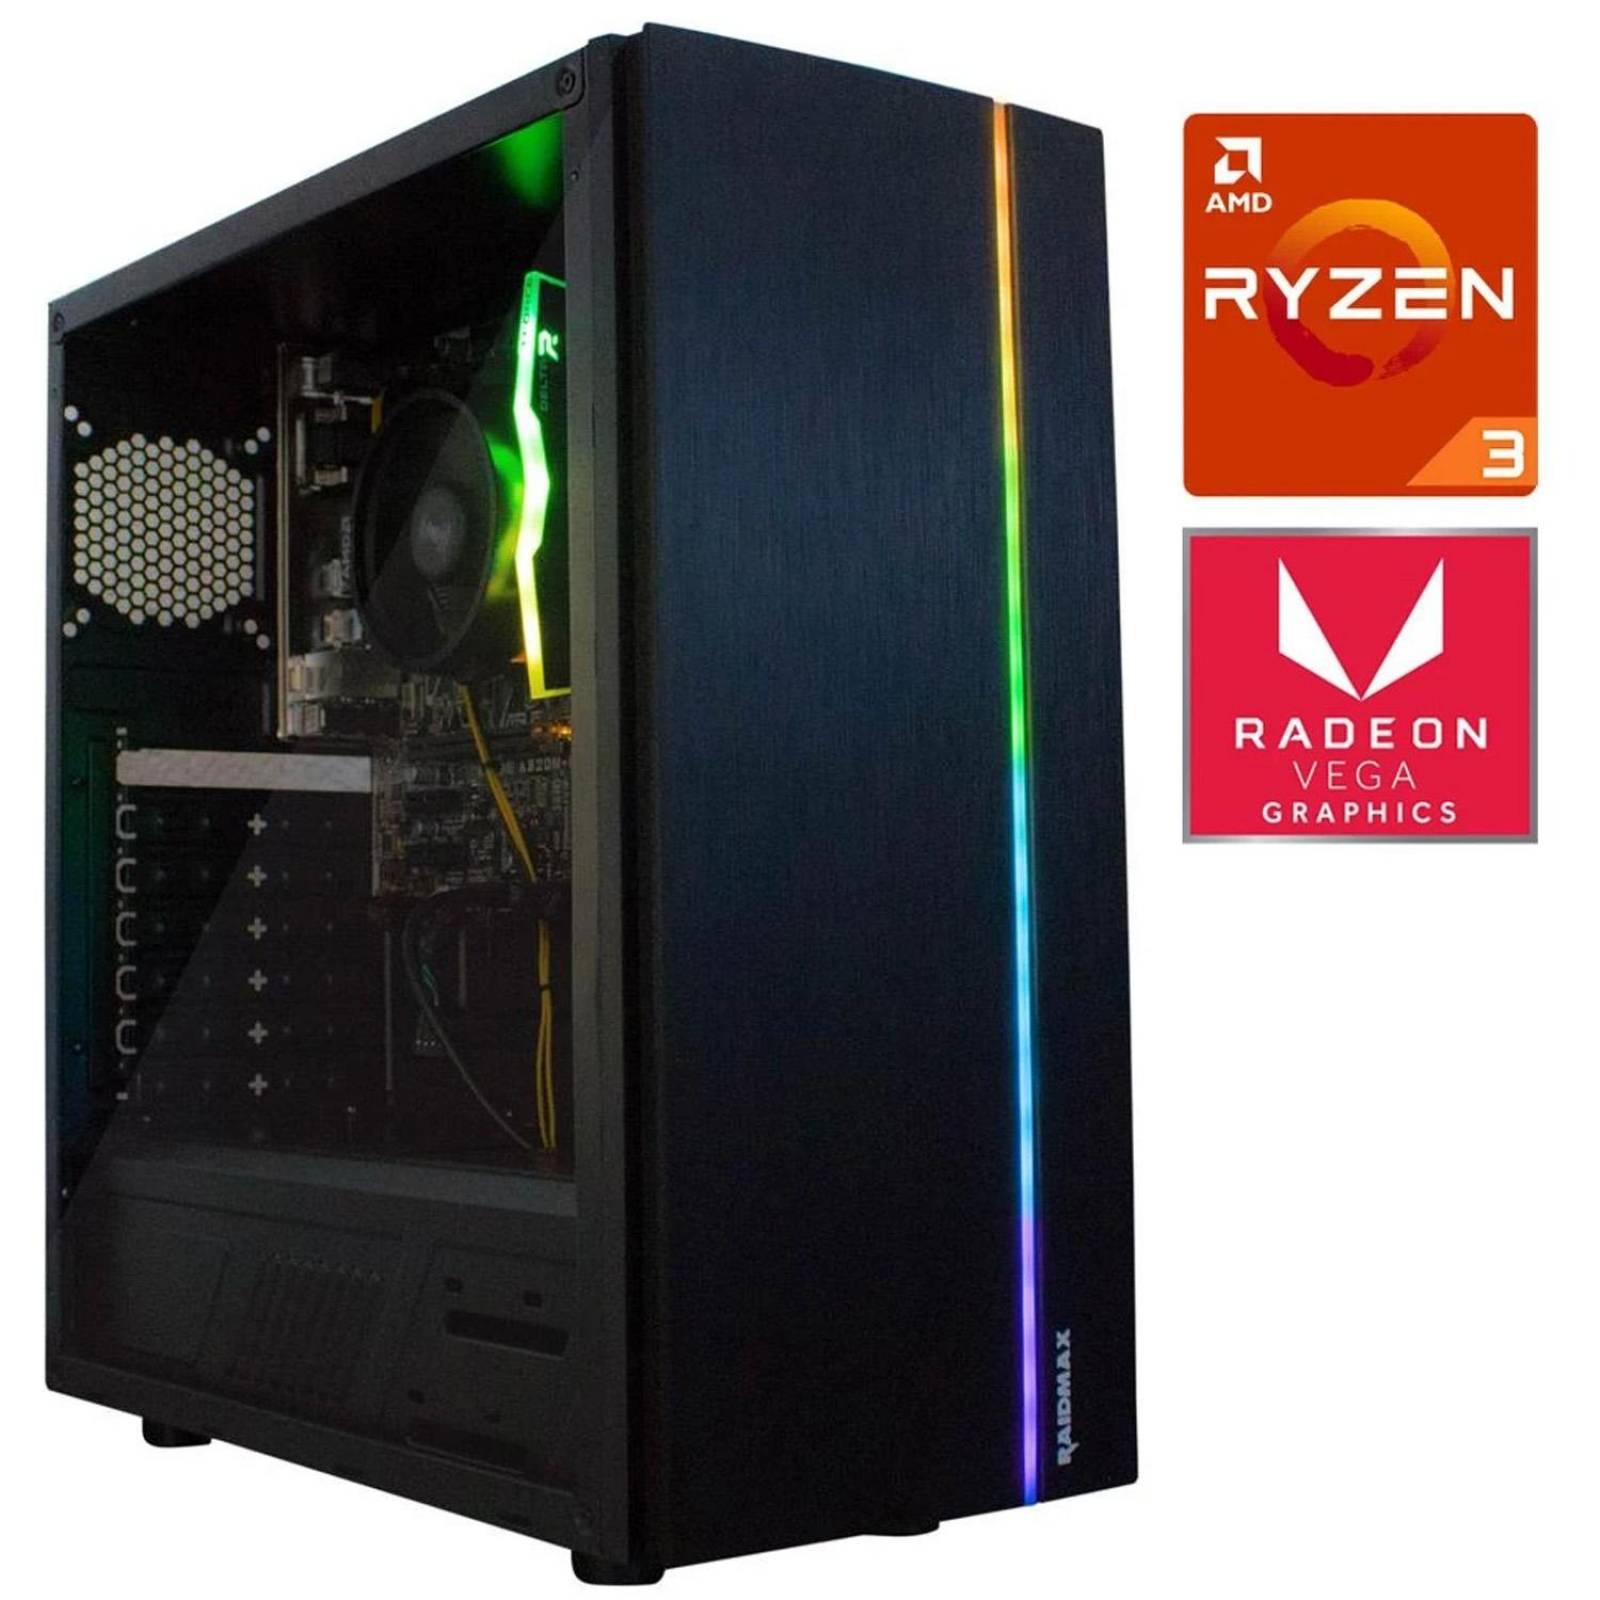 Pc Gamer Xtreme Amd Ryzen 3 3200g Ram 8Gb Unidad SSD 240Gb Graficos Radeon Vega 8 